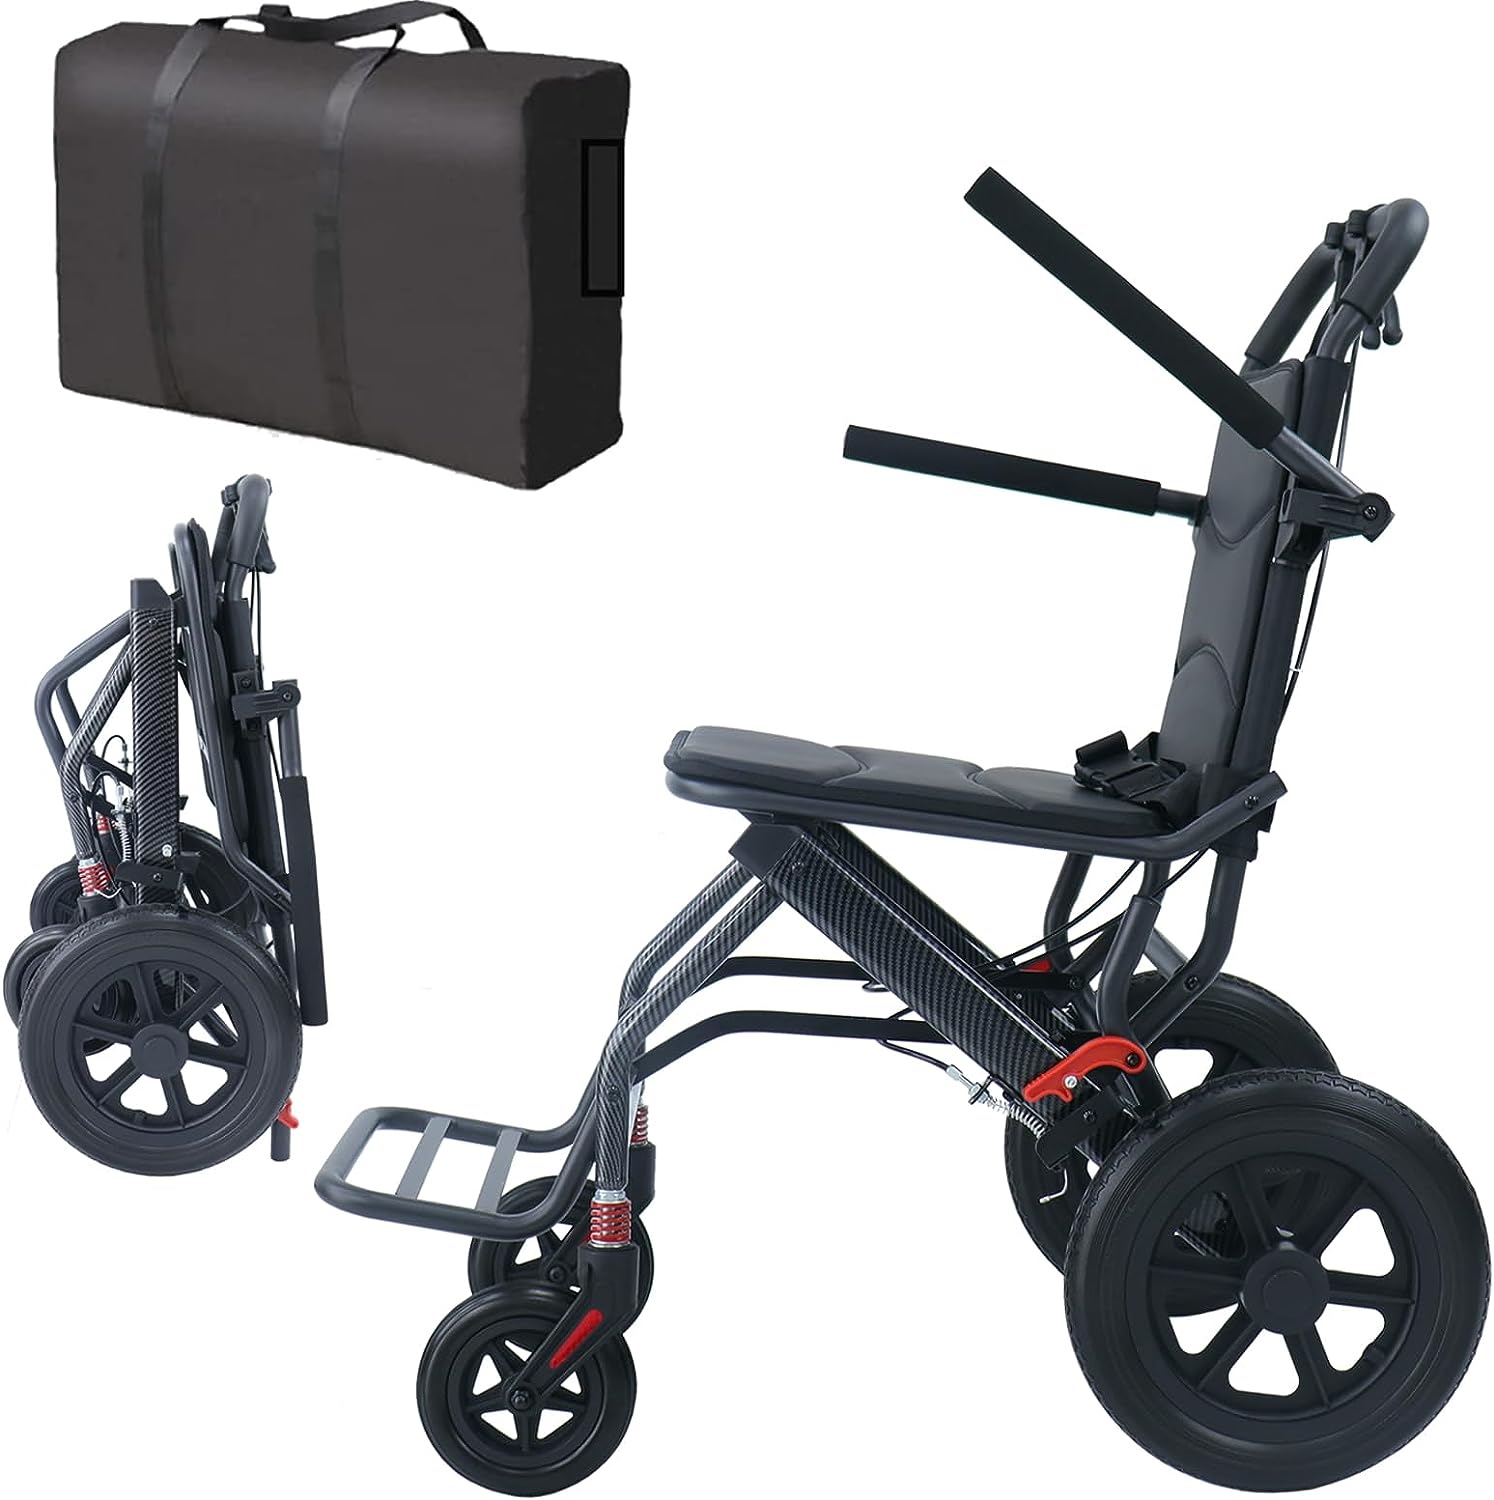 Portable Ultra-Light Wheelchair for The Elderly and Children (with handbrake)